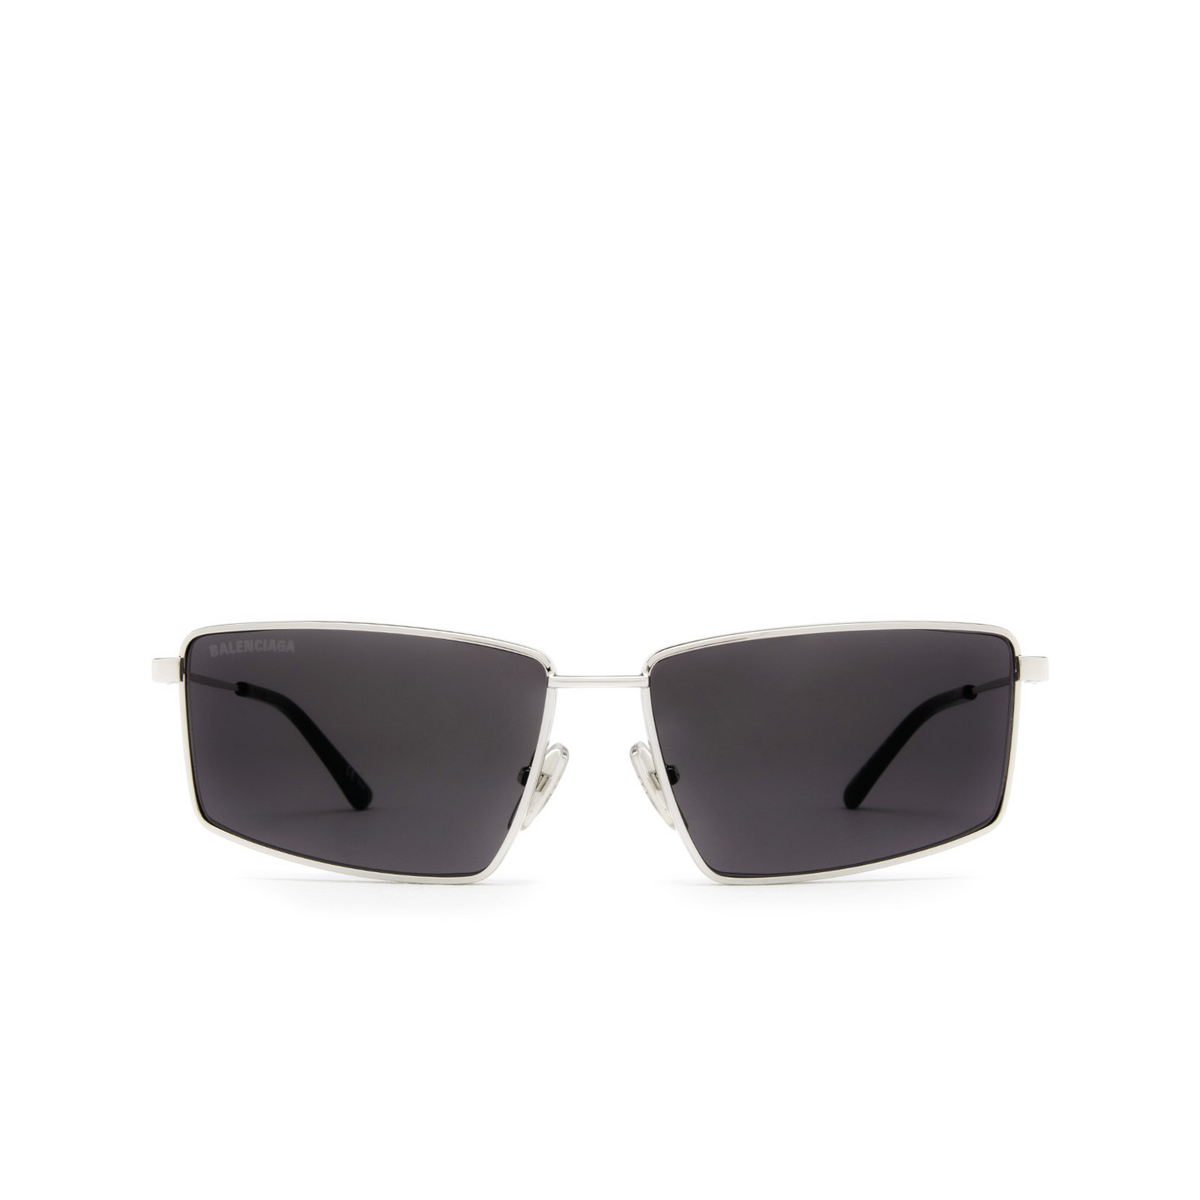 Balenciaga® Rectangle Sunglasses: BB0195S color Silver 003 - front view.